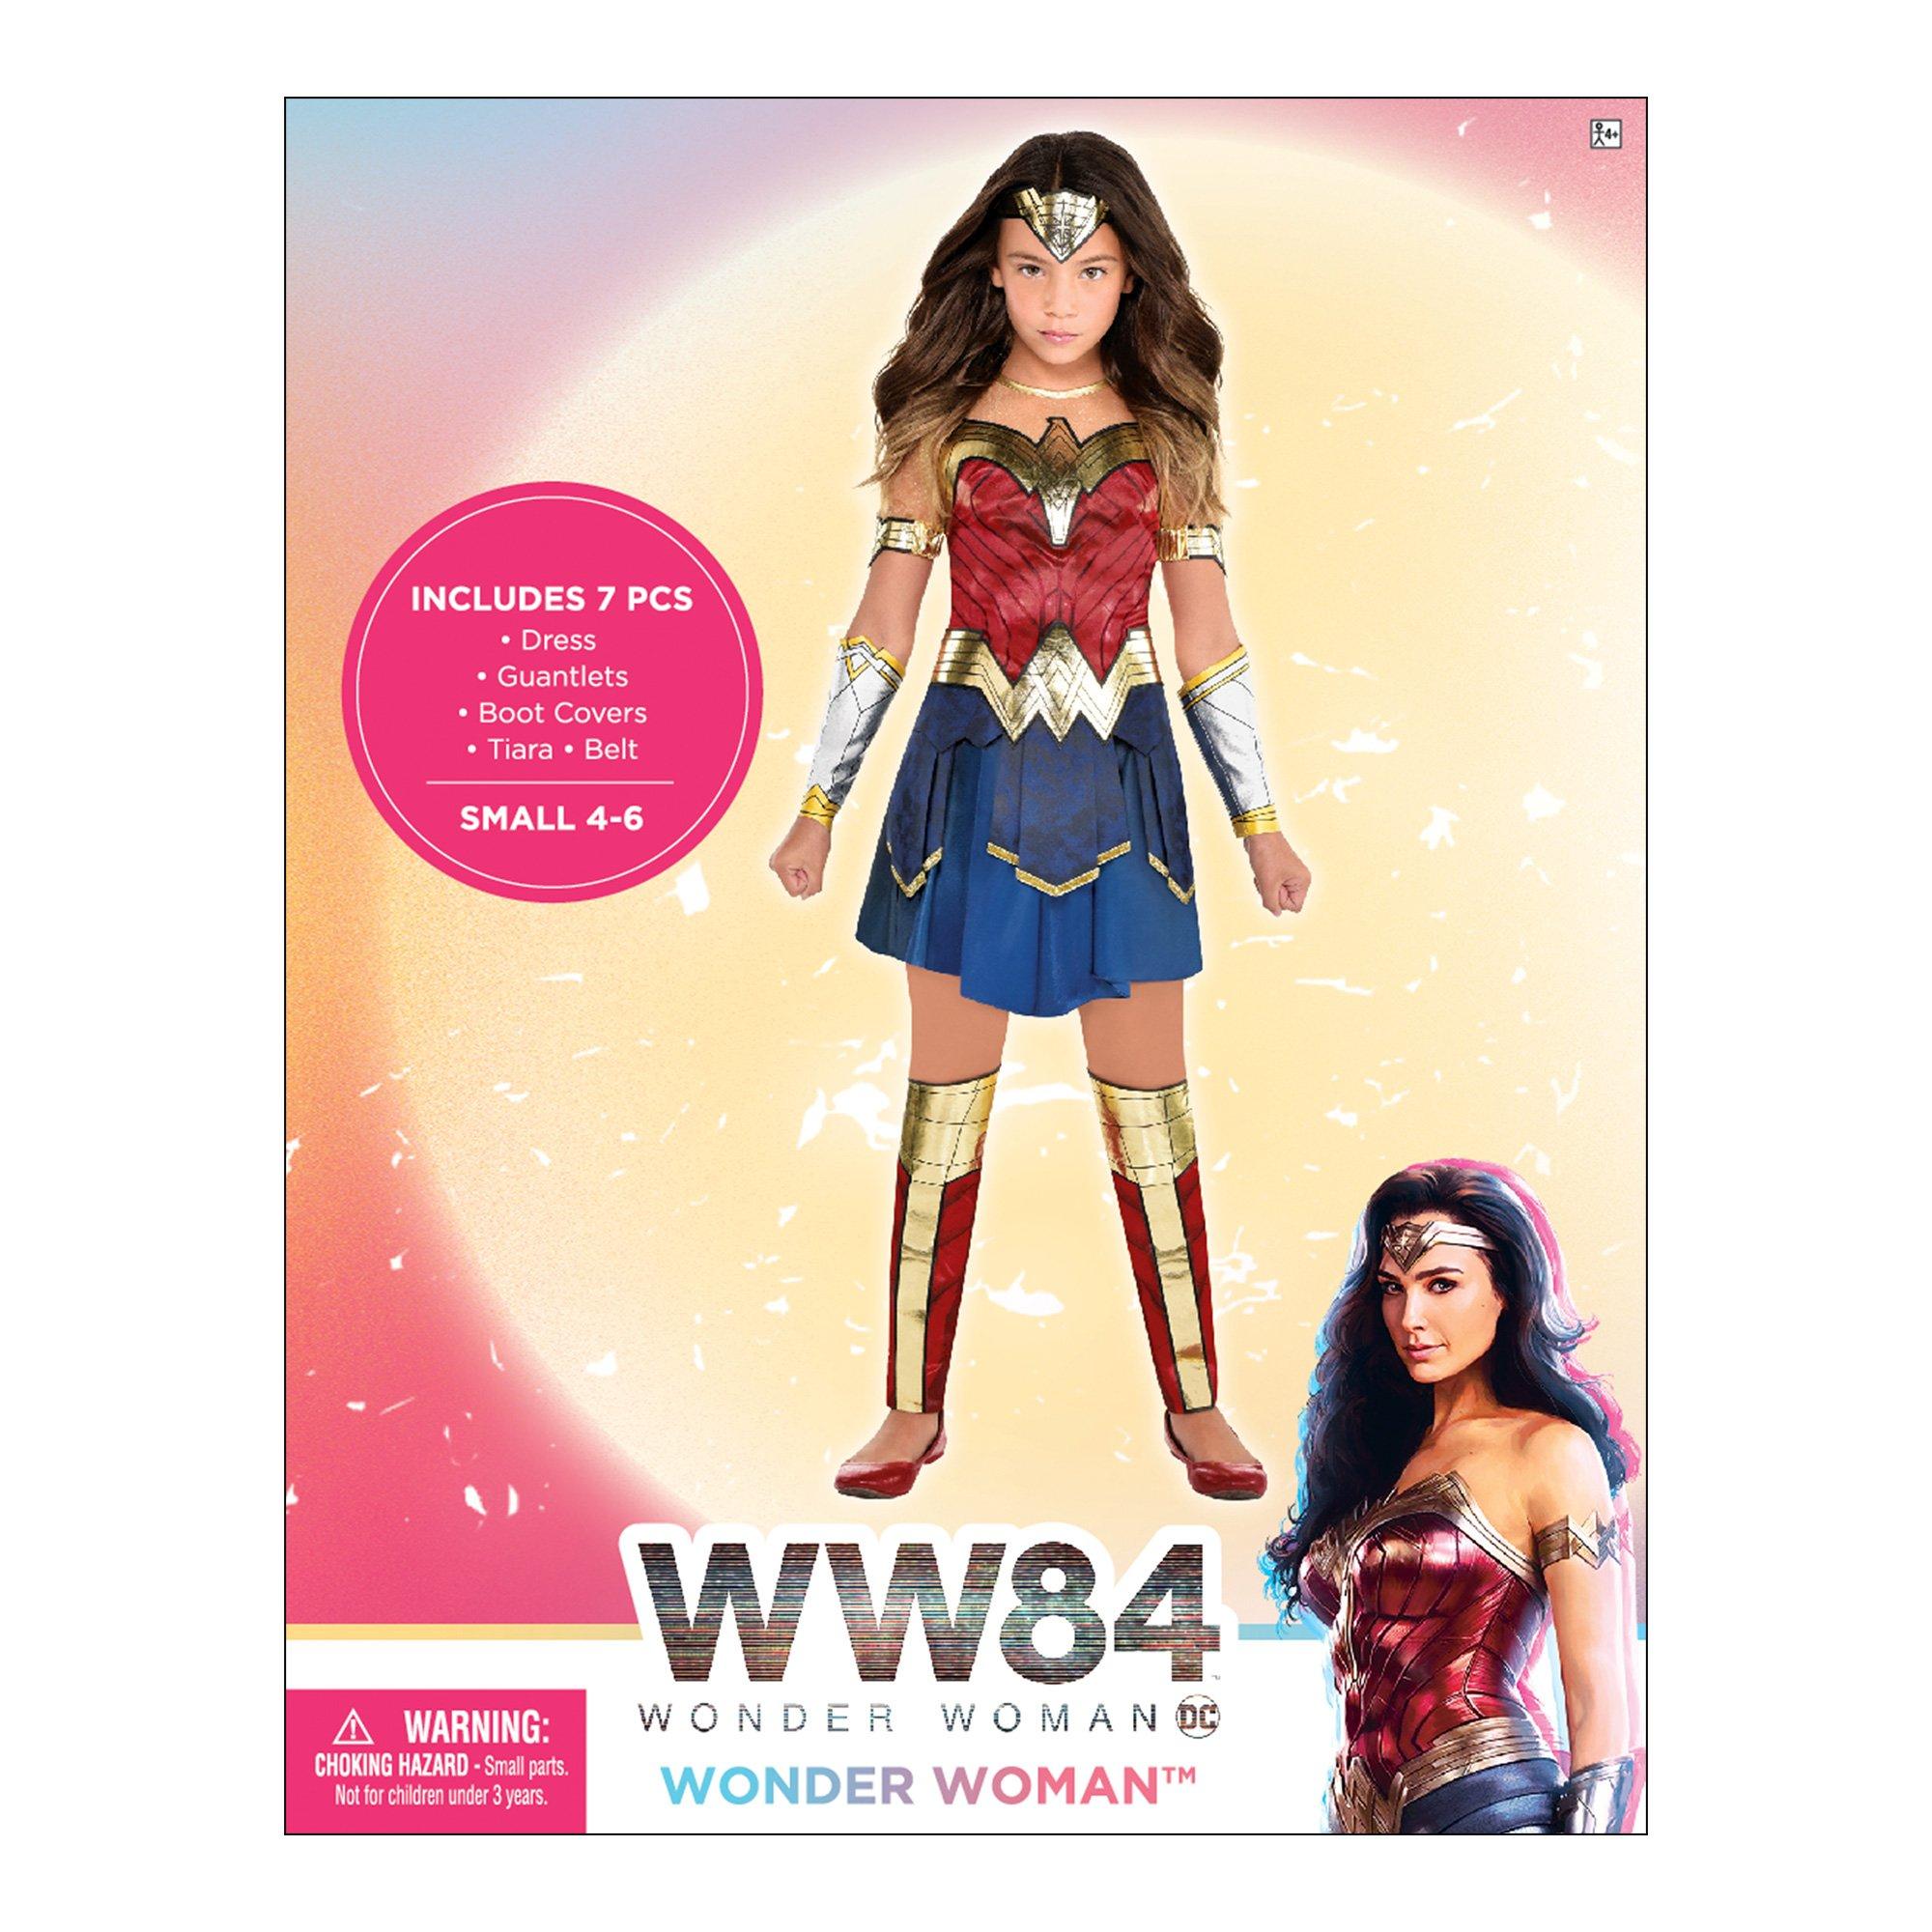 Kids' Wonder Woman Deluxe Costume - WW 1984